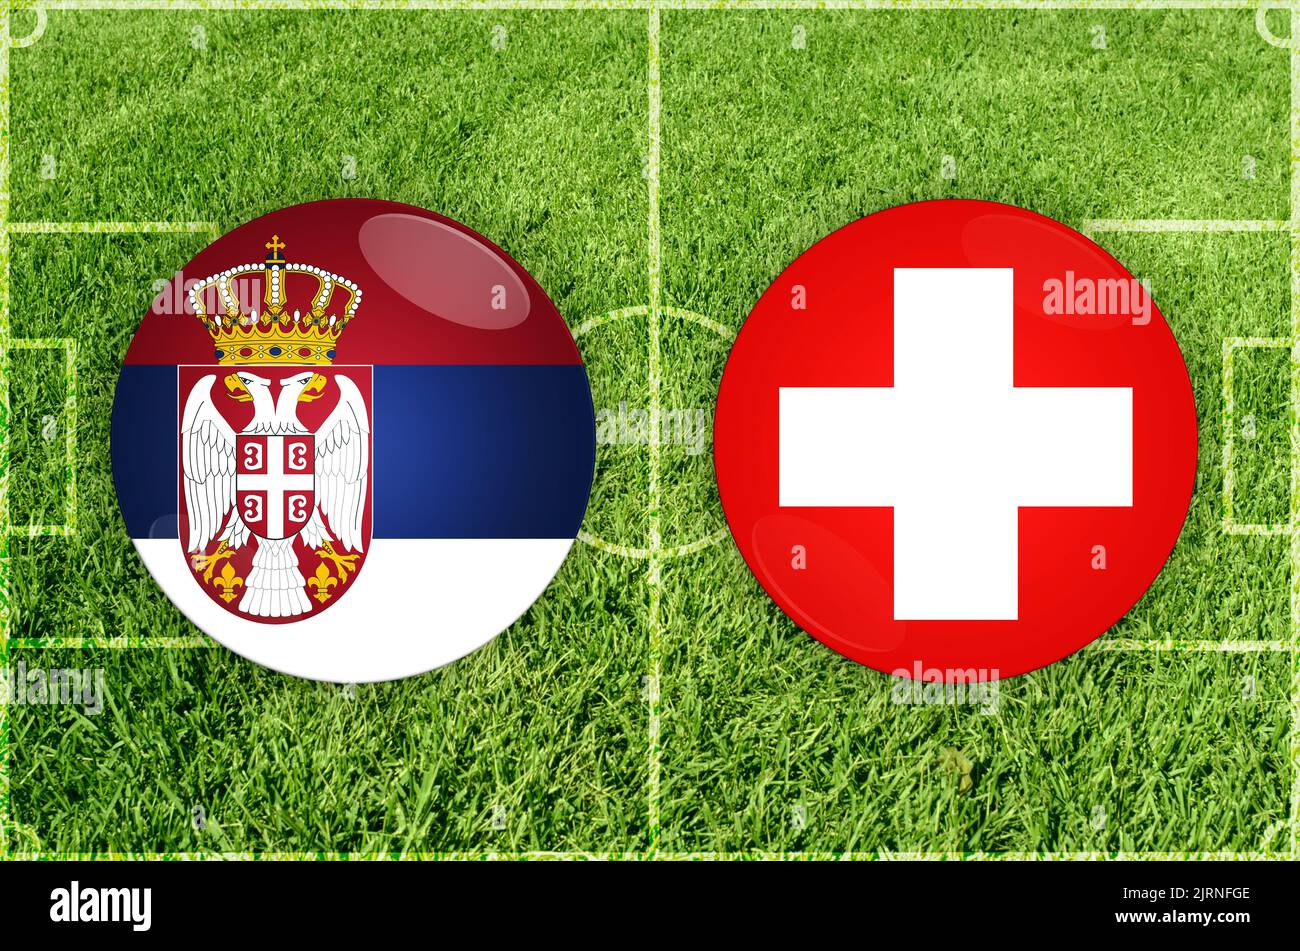 Illustration for Football match Serbia vs Switzerland Stock Photo